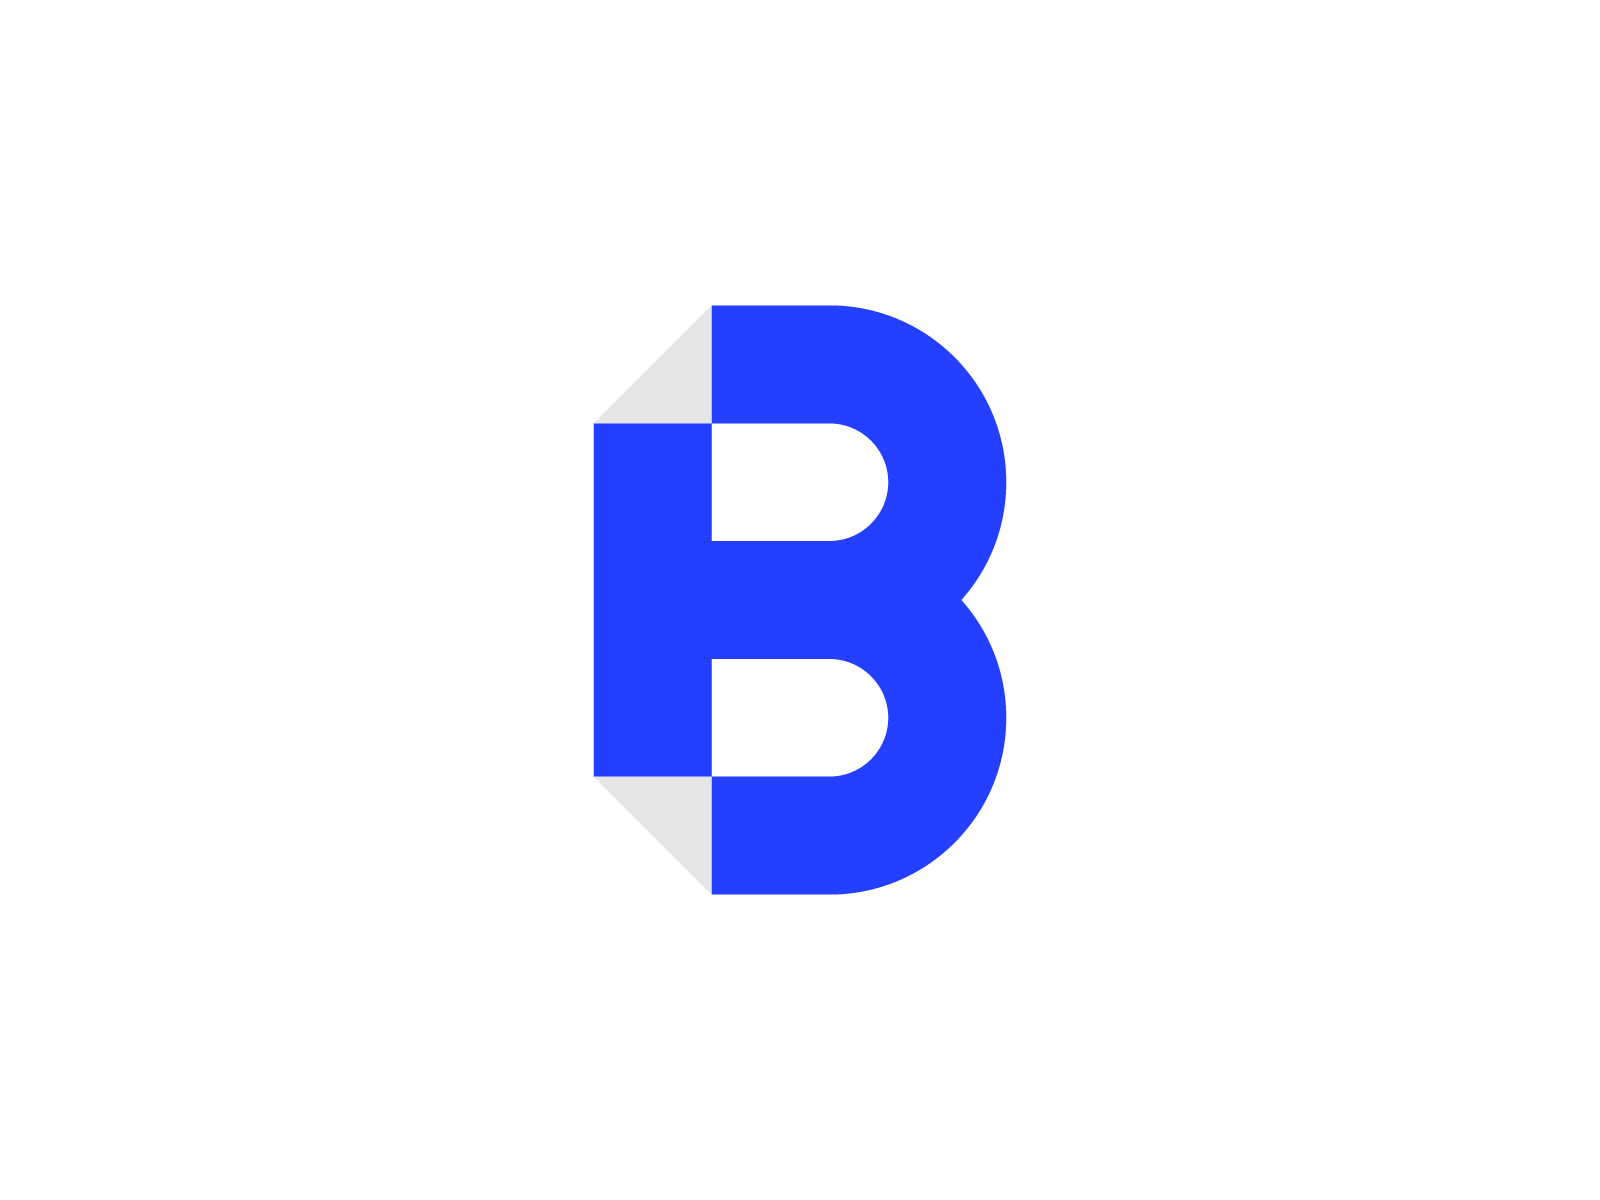 Letter B Logo Stock Illustrations, Royalty-Free Vector Graphics & Clip Art  - iStock